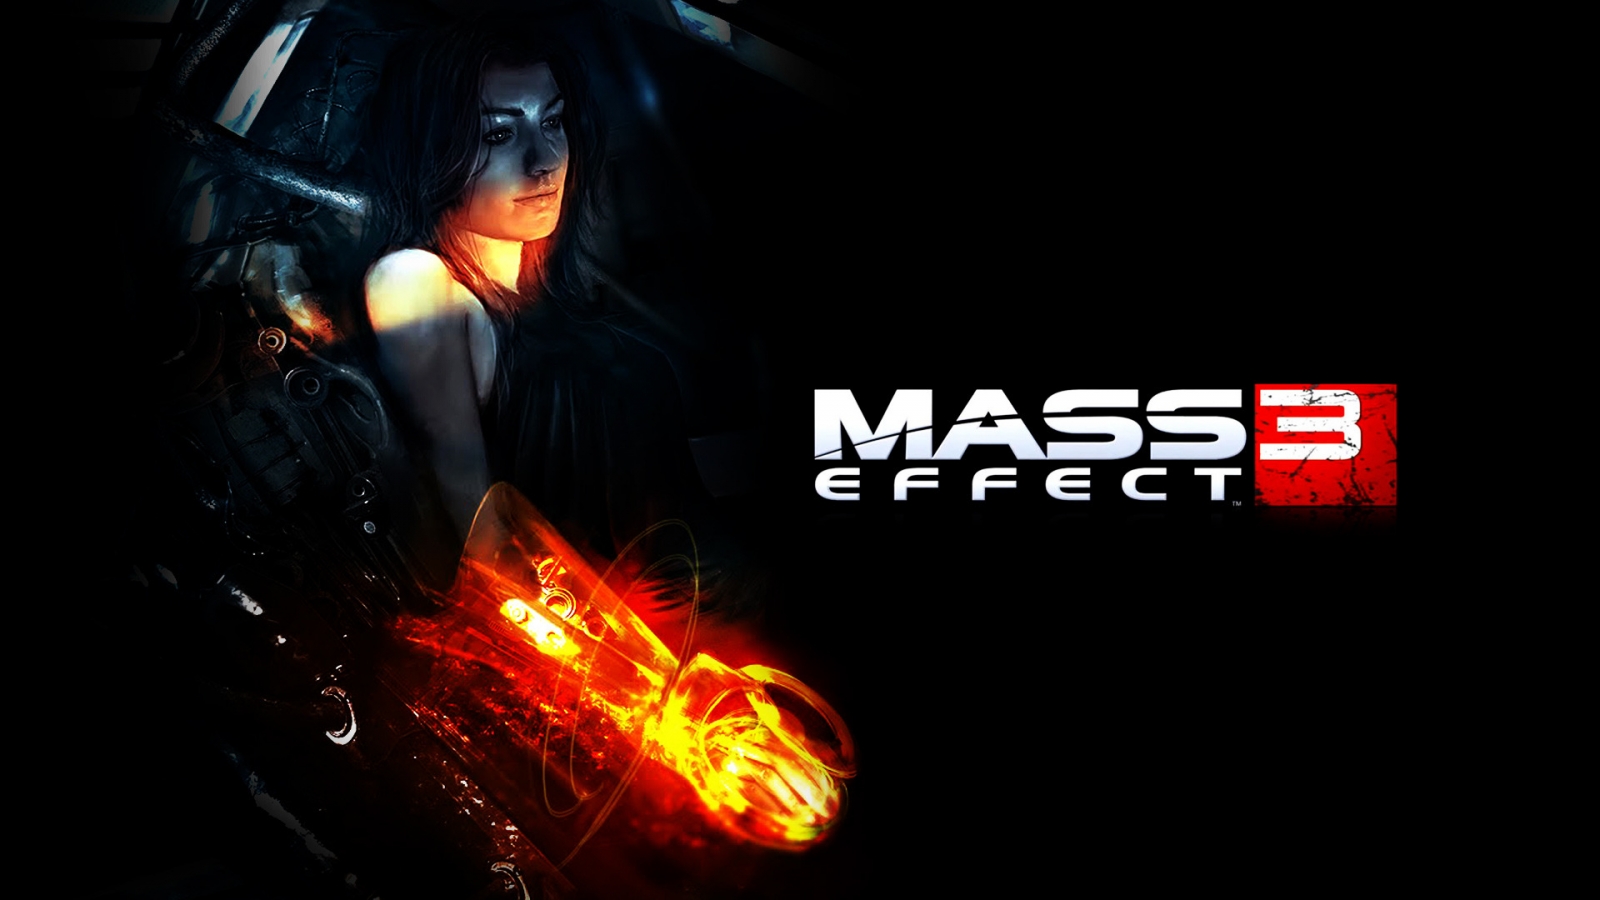 Miranda Mass Effect 3 for 1600 x 900 HDTV resolution